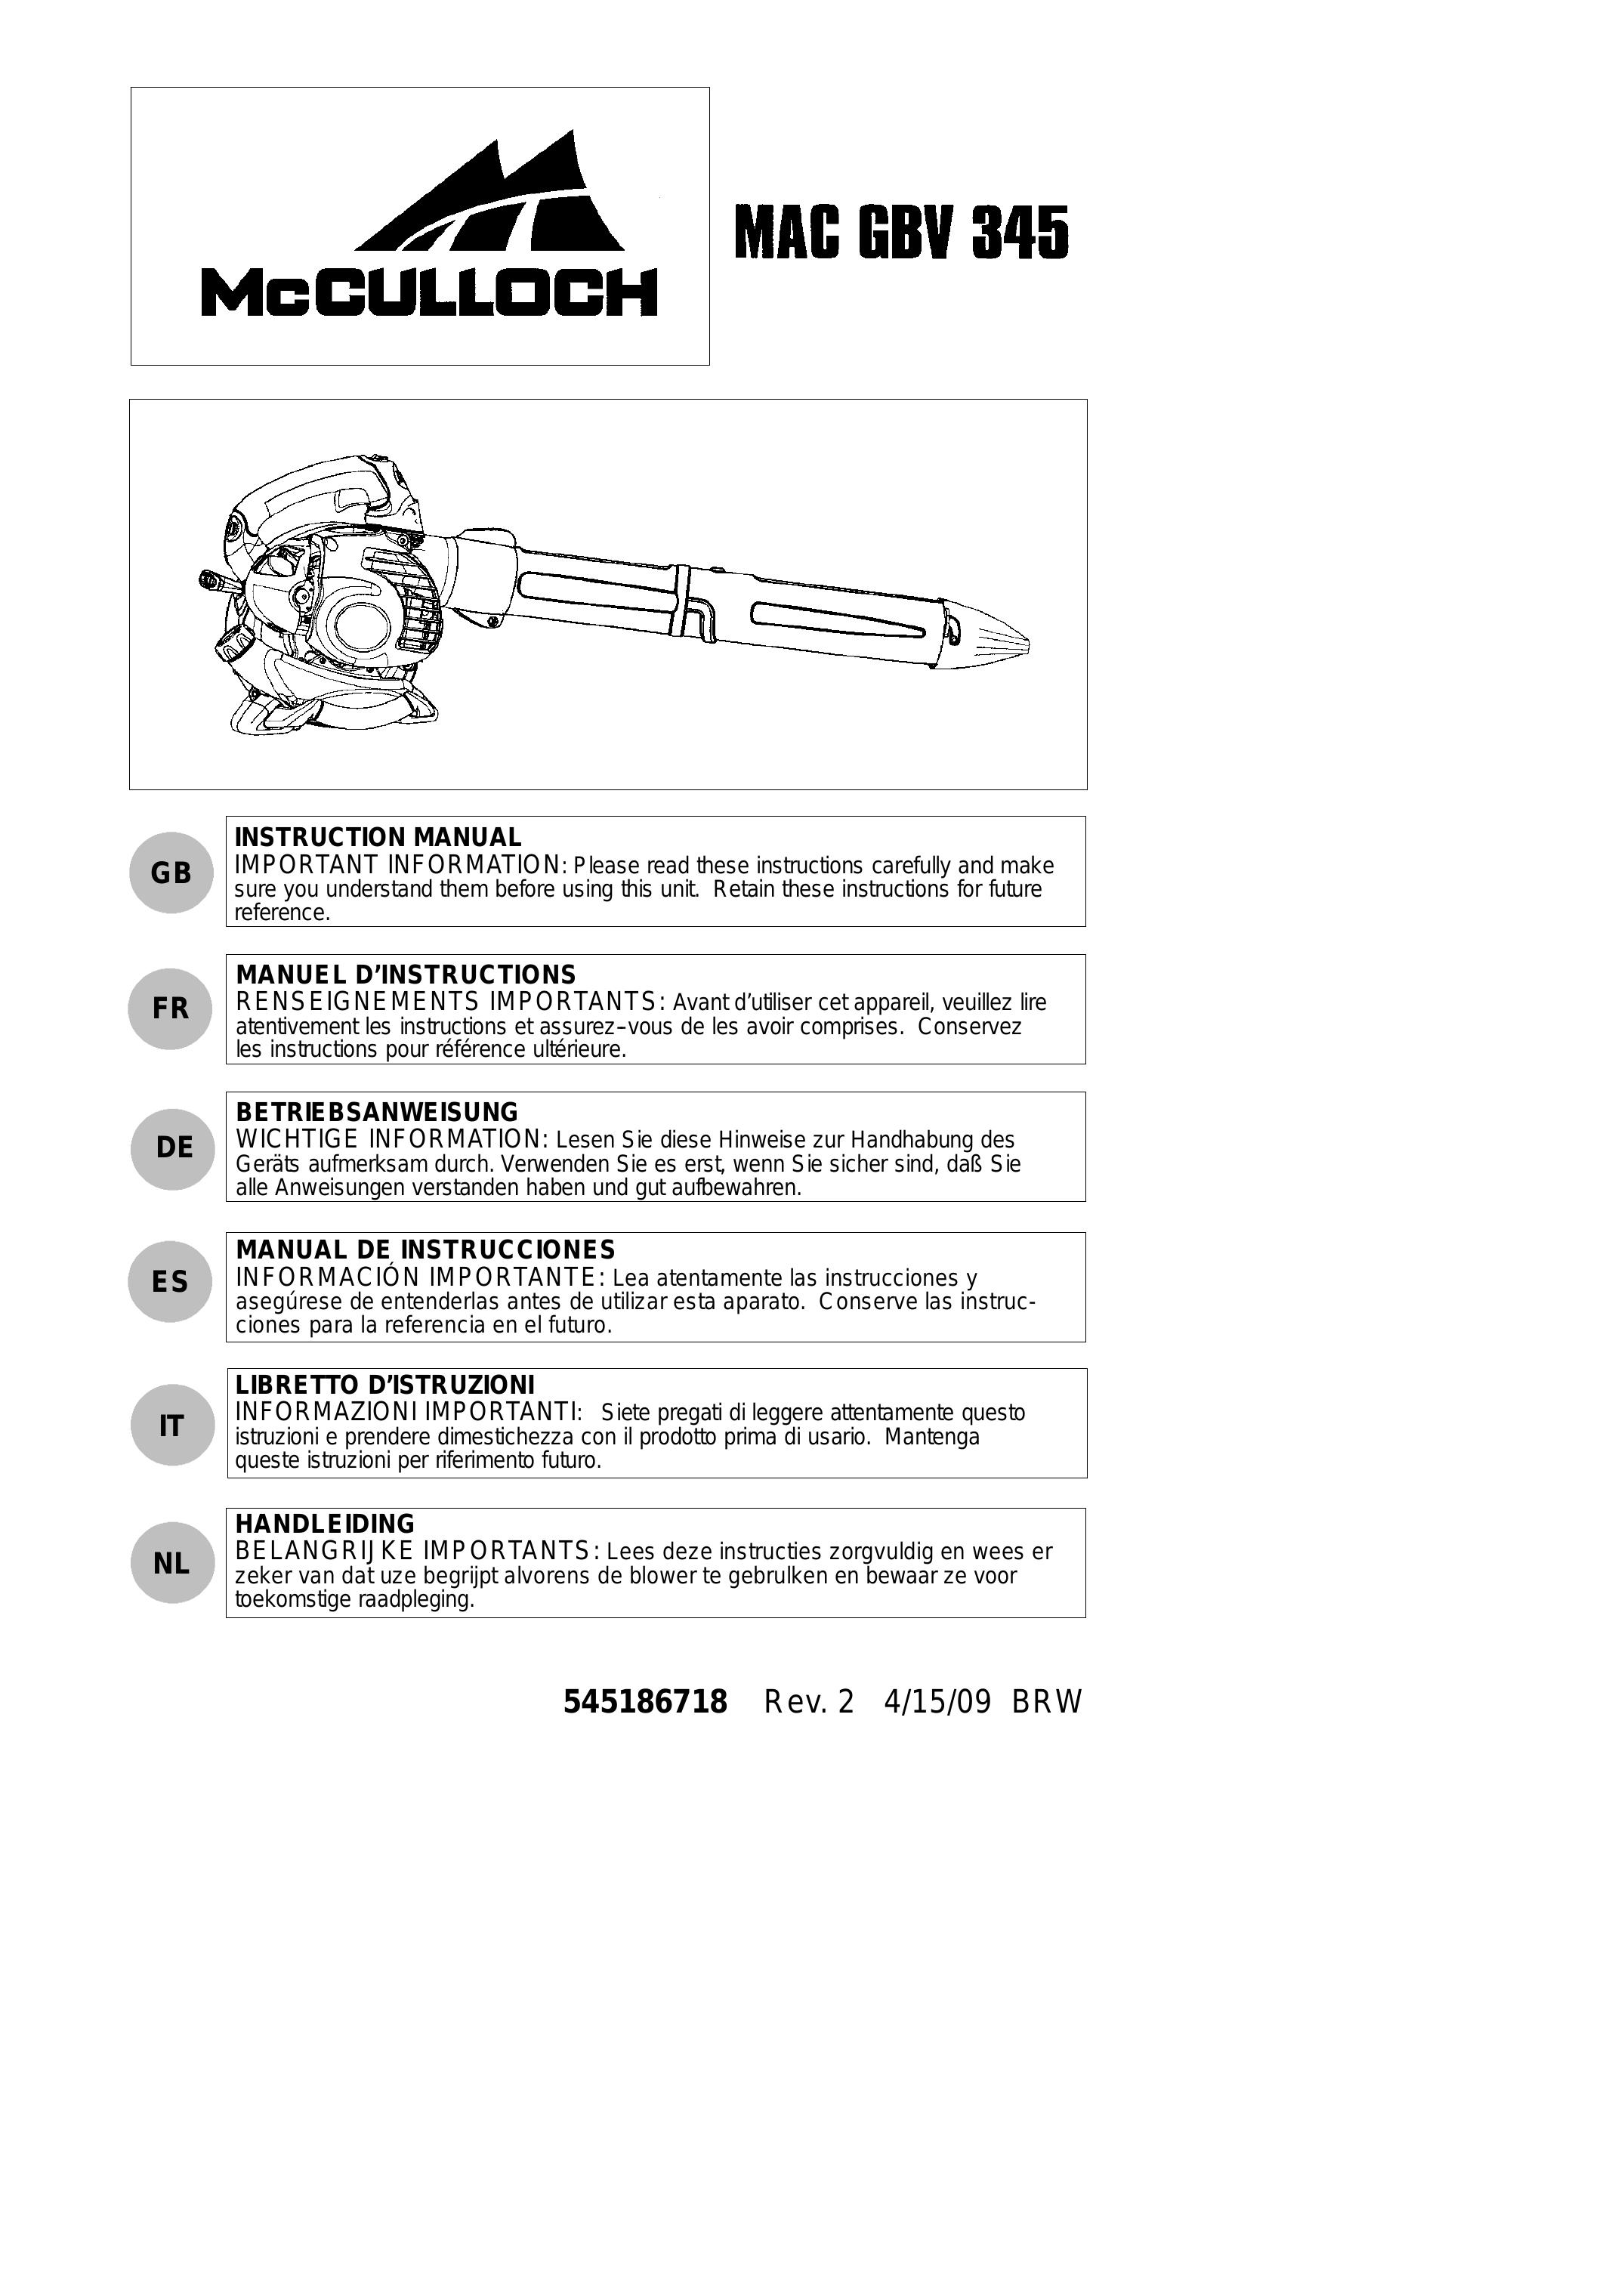 McCulloch MAC GBV 345 Blower User Manual